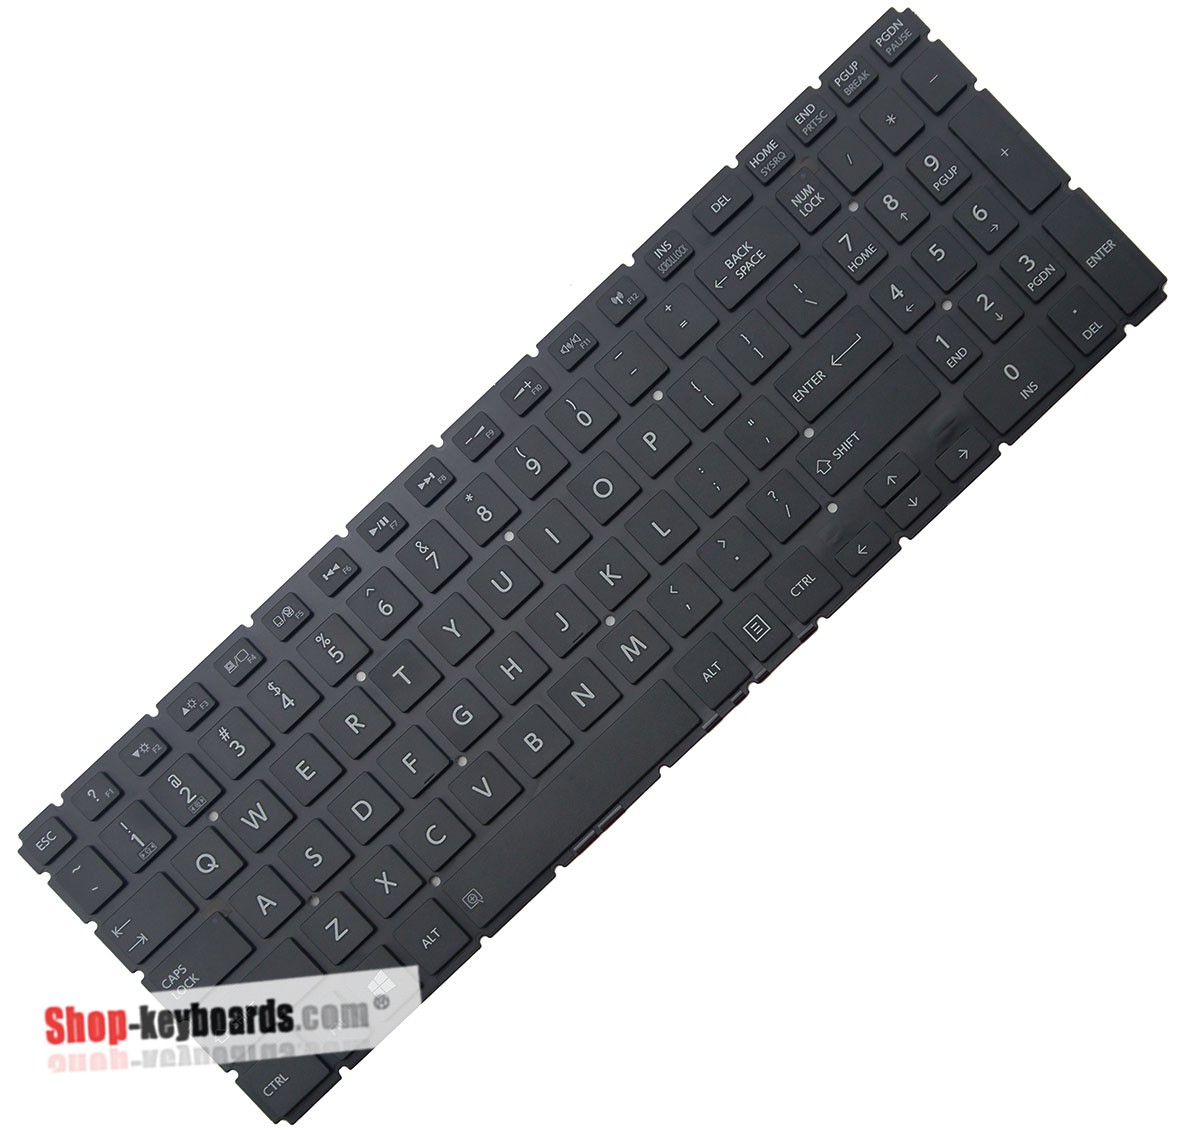 Toshiba AEBLYF00020 Keyboard replacement